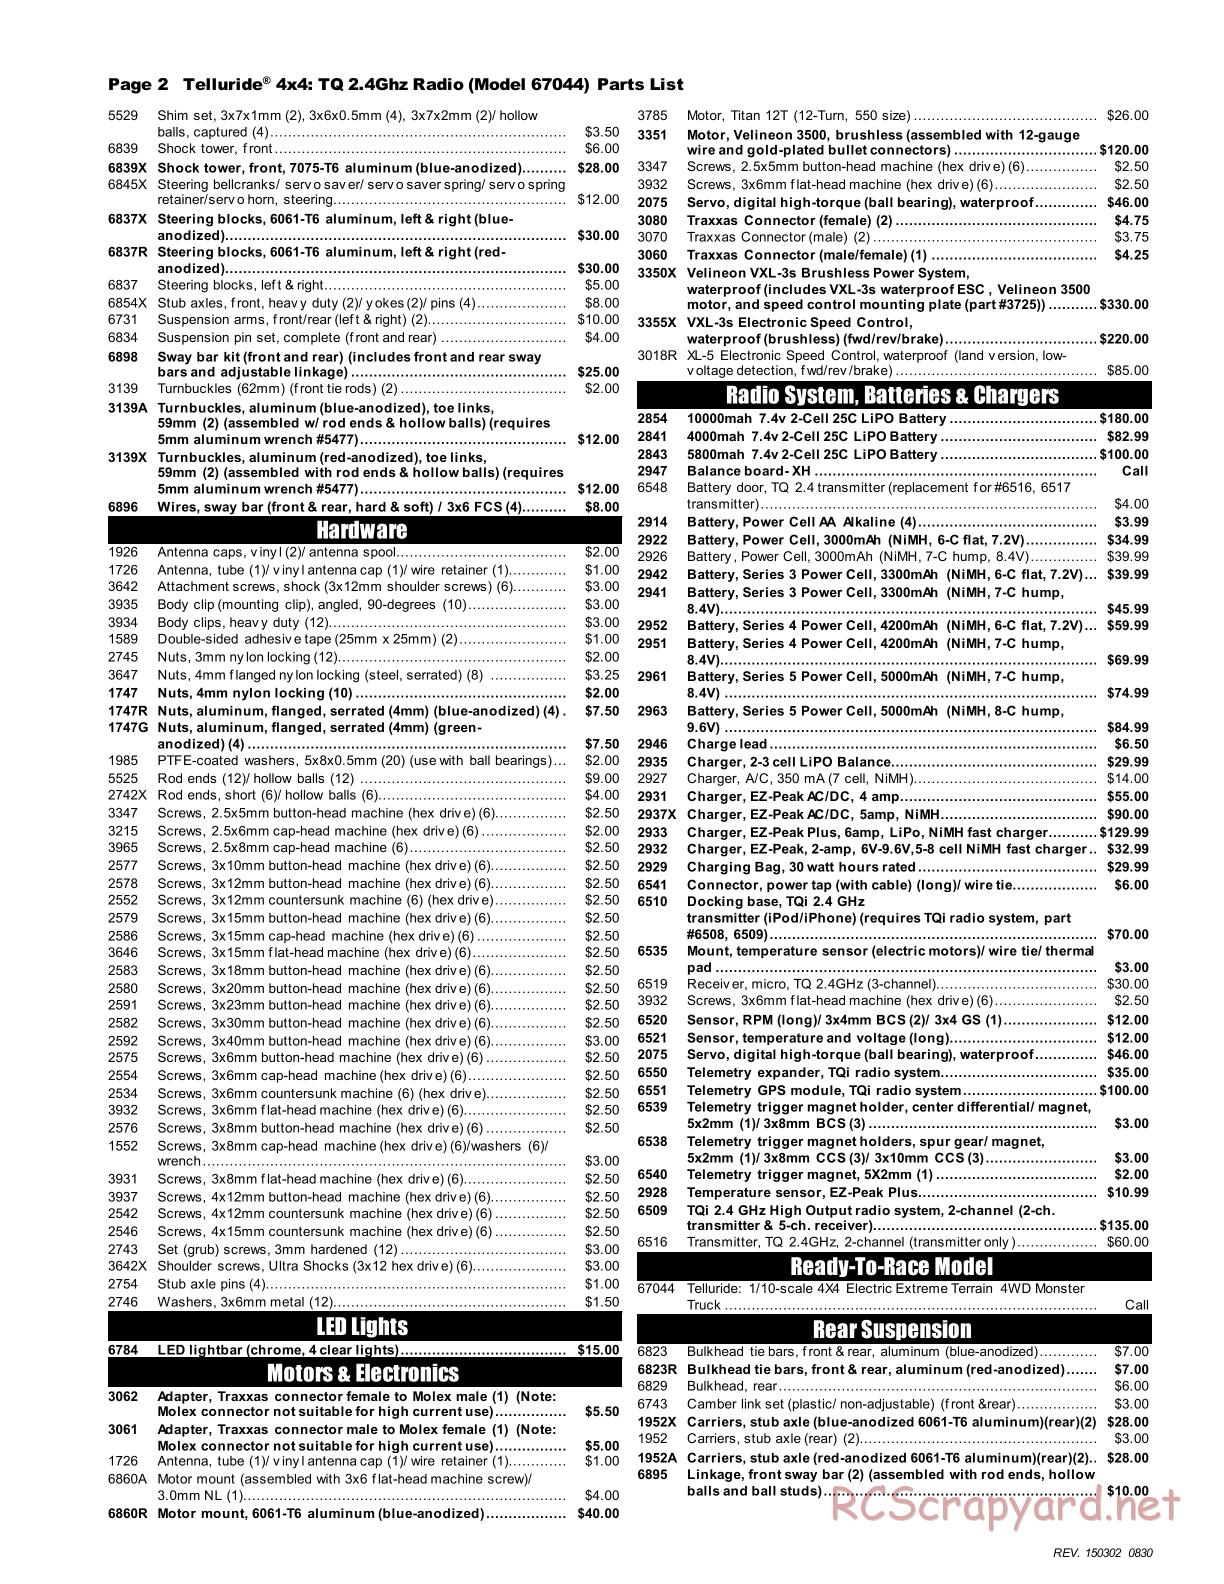 Traxxas - Telluride 4x4 (2013) - Parts List - Page 2